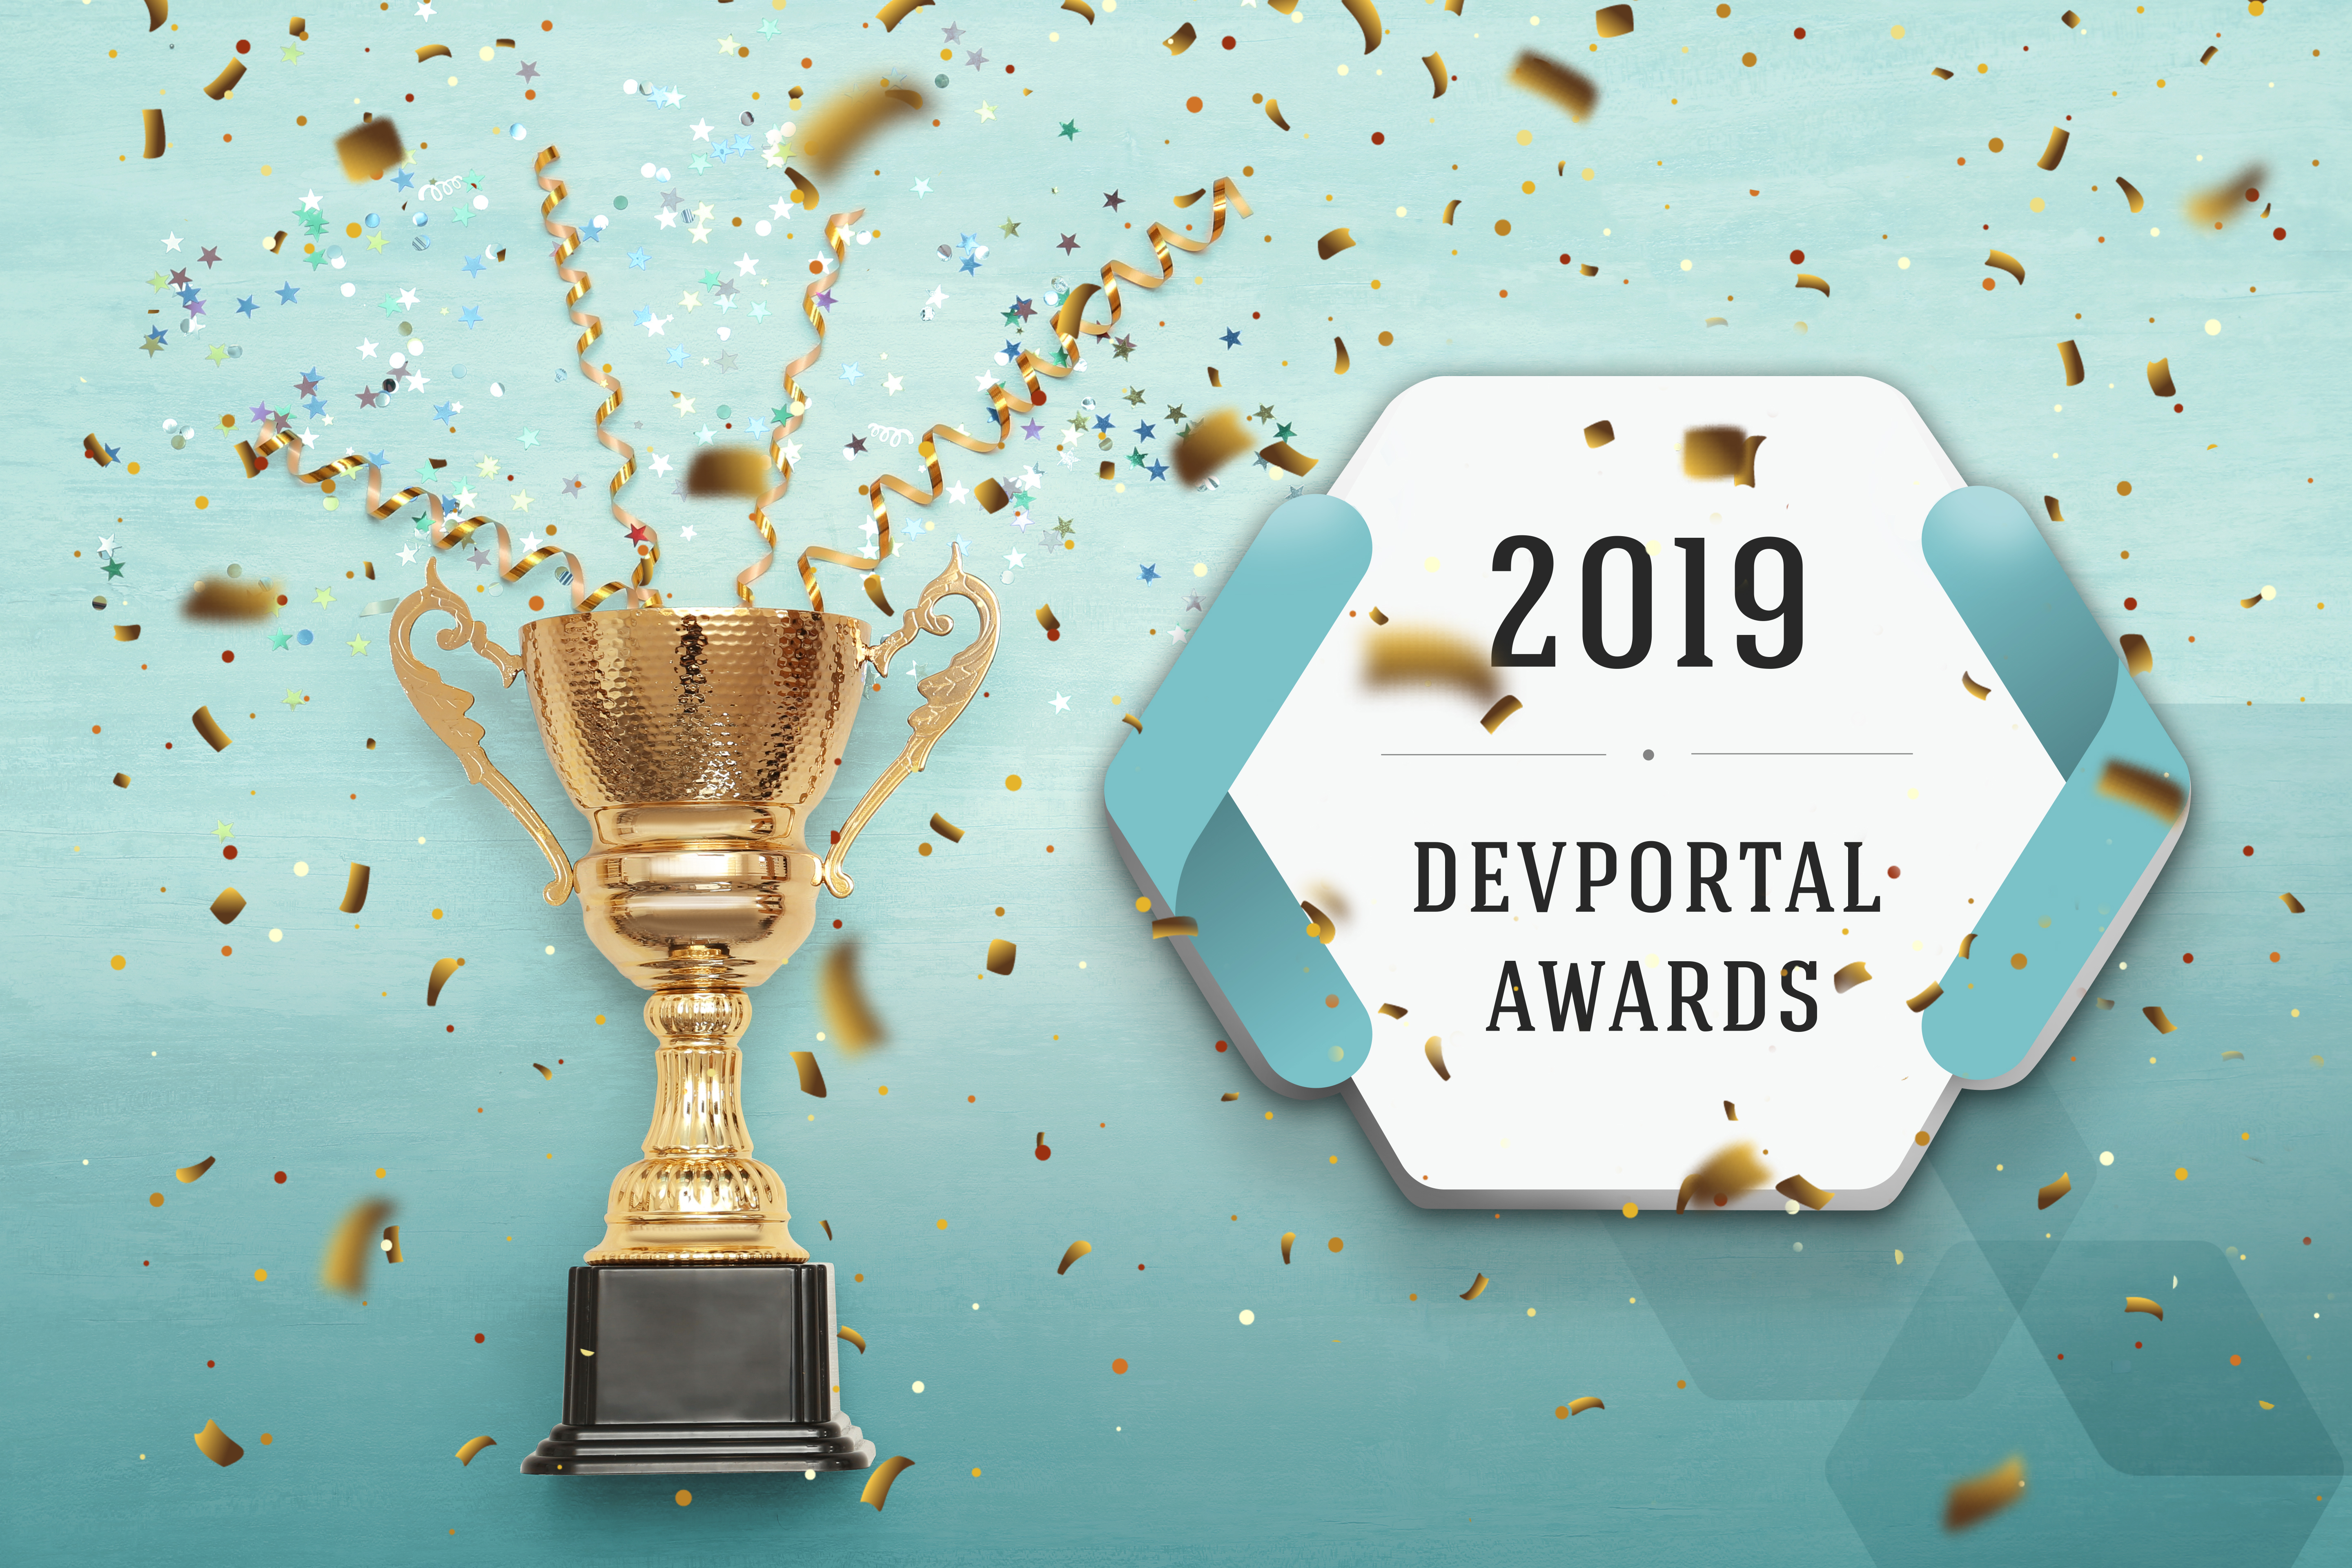 DevPortal Awards 2019 image